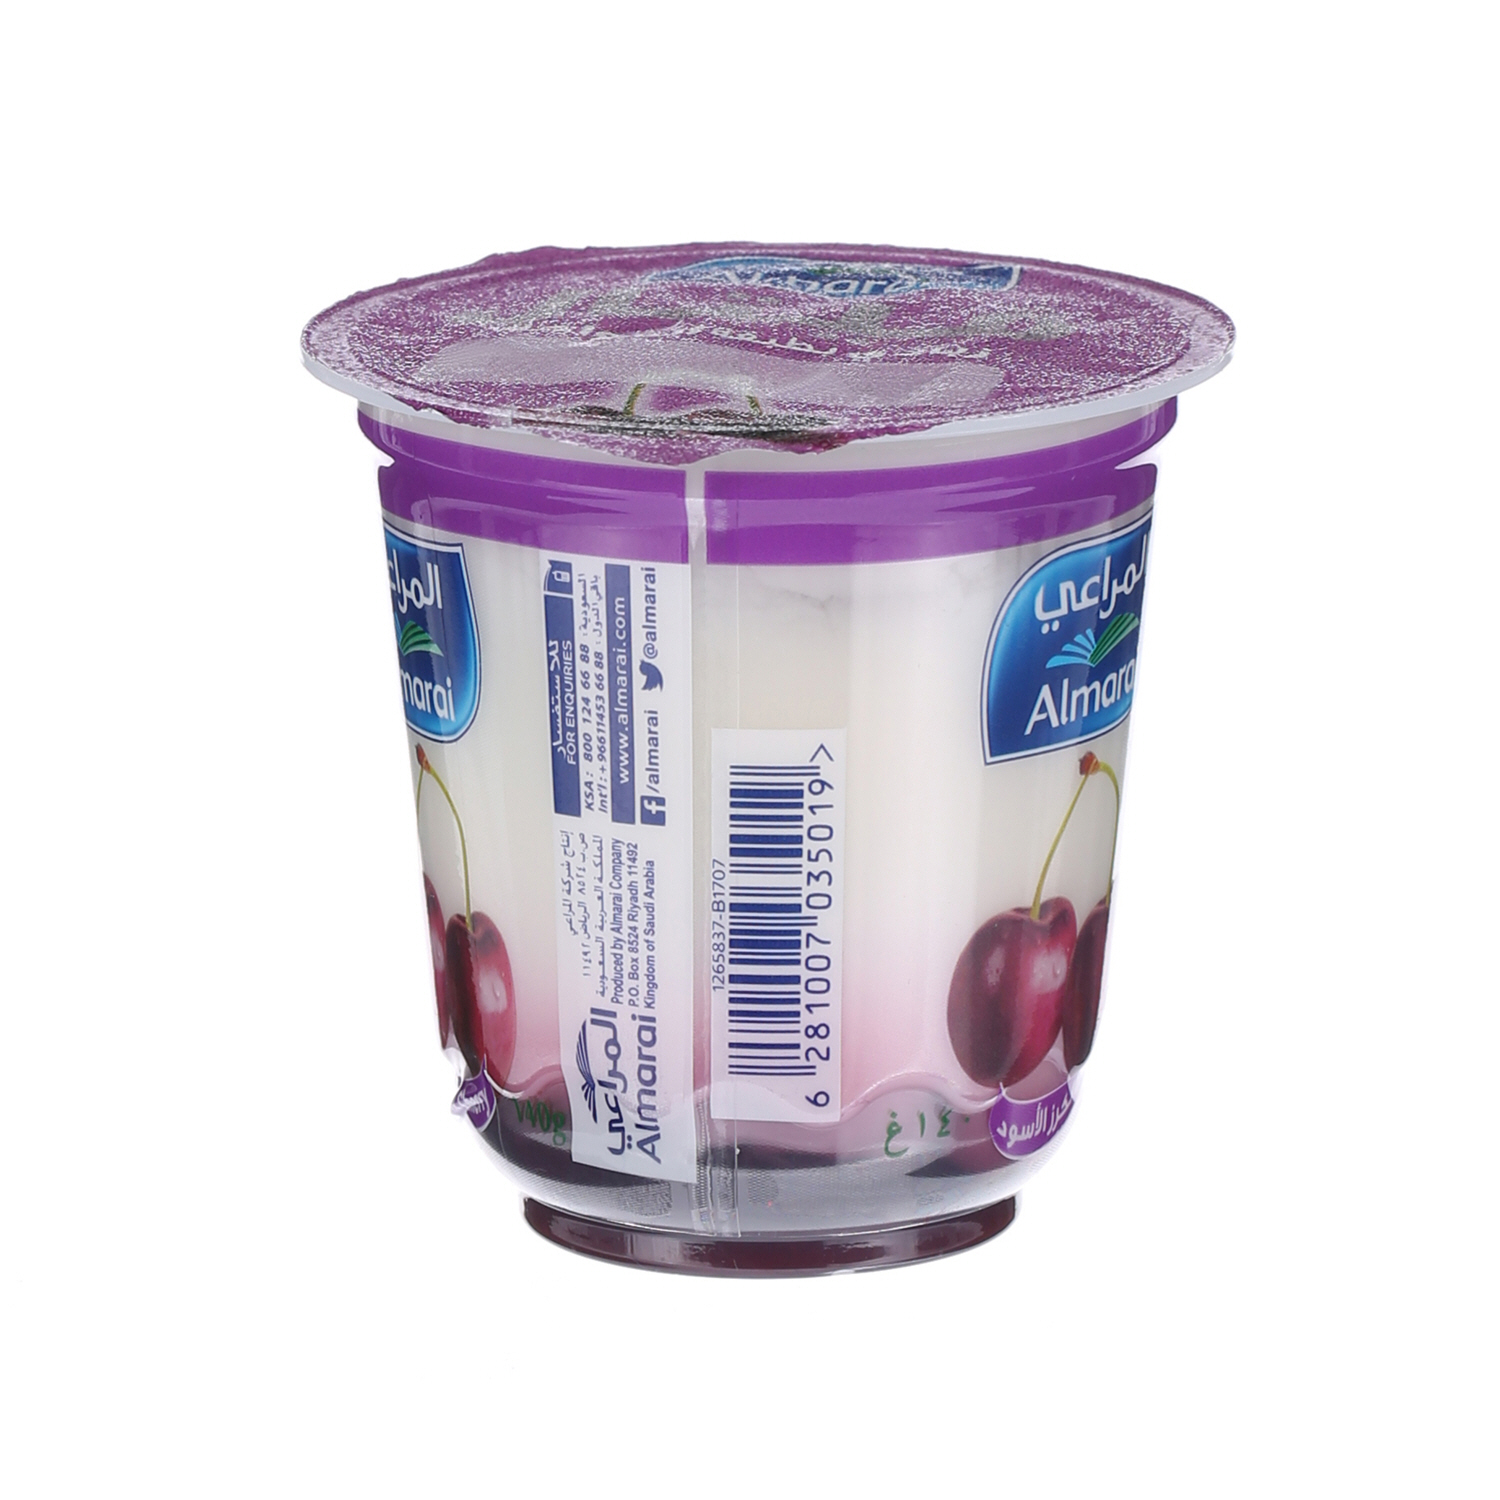 Al Marai Vetal Flavoured Youghurt Black Cherry 140 g